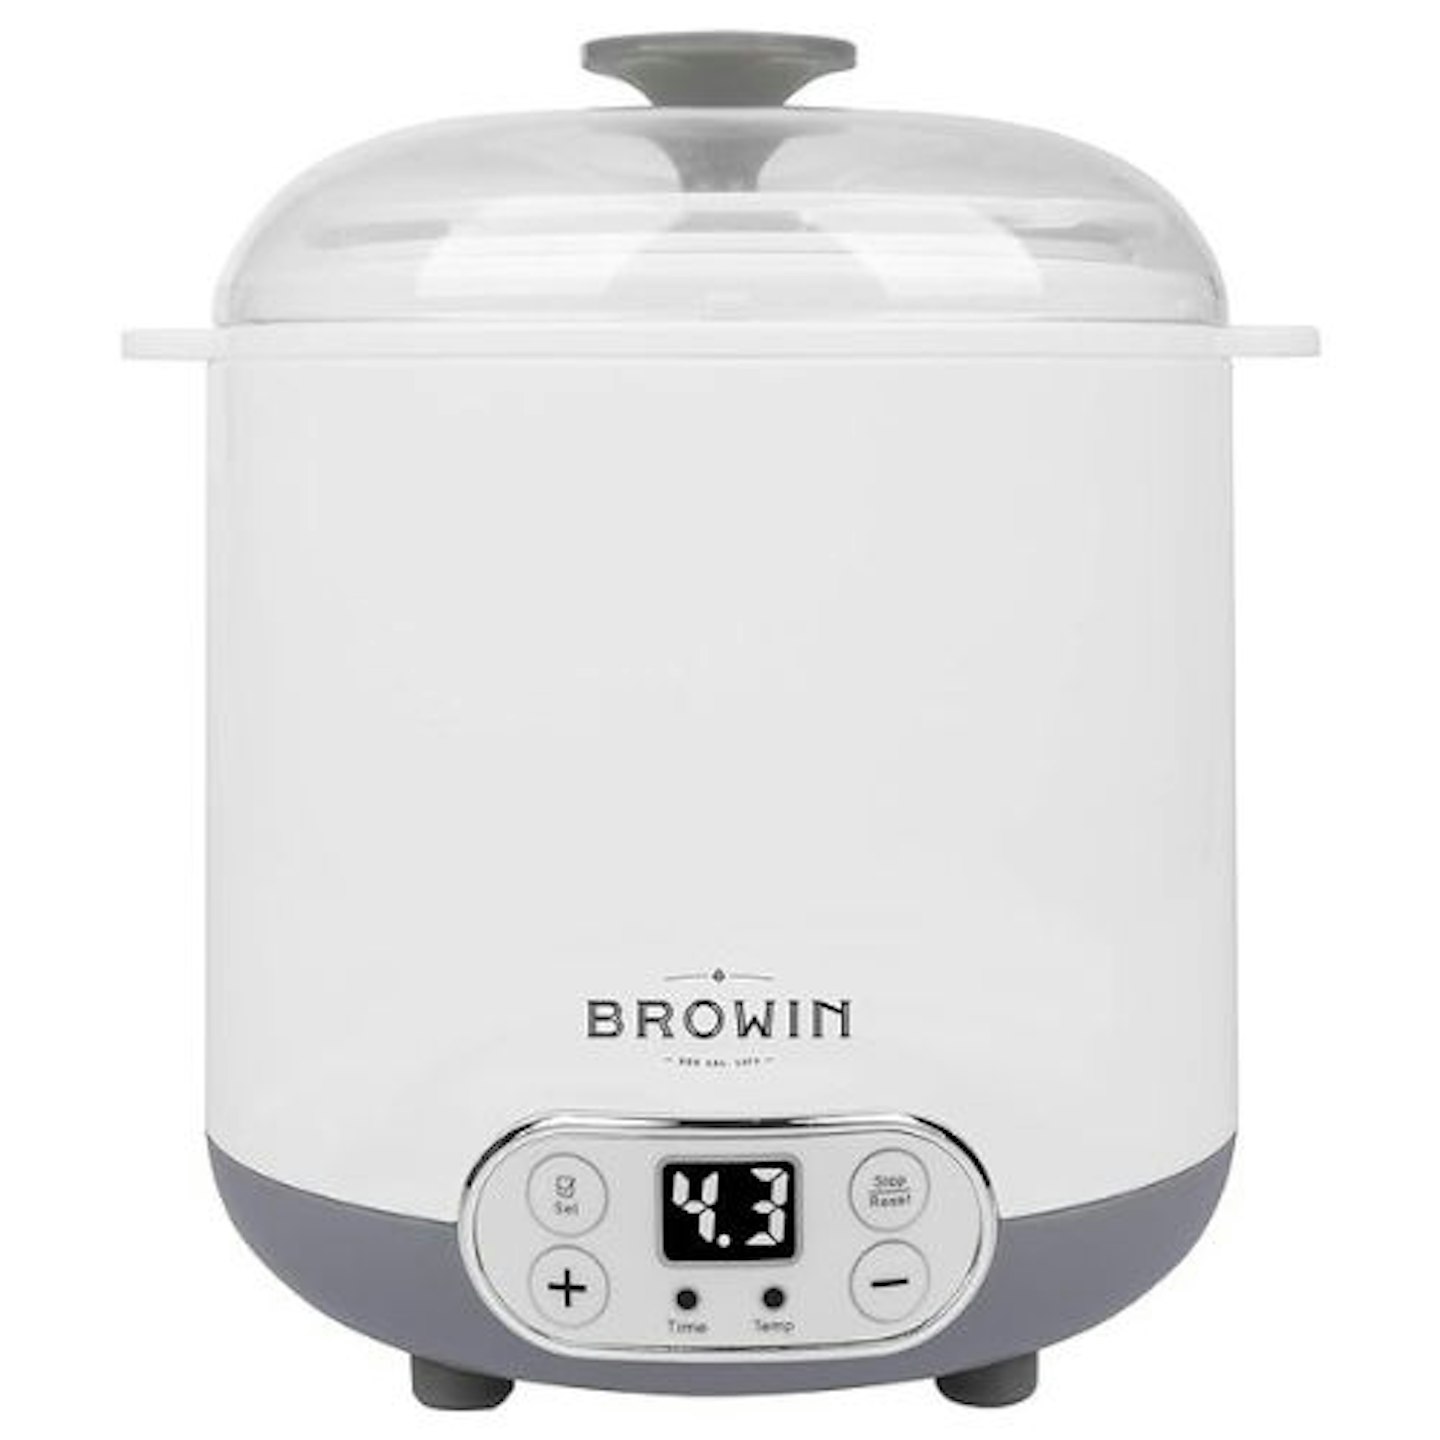 Browin 801013 Multifunctional Cheese and Yoghurt Device